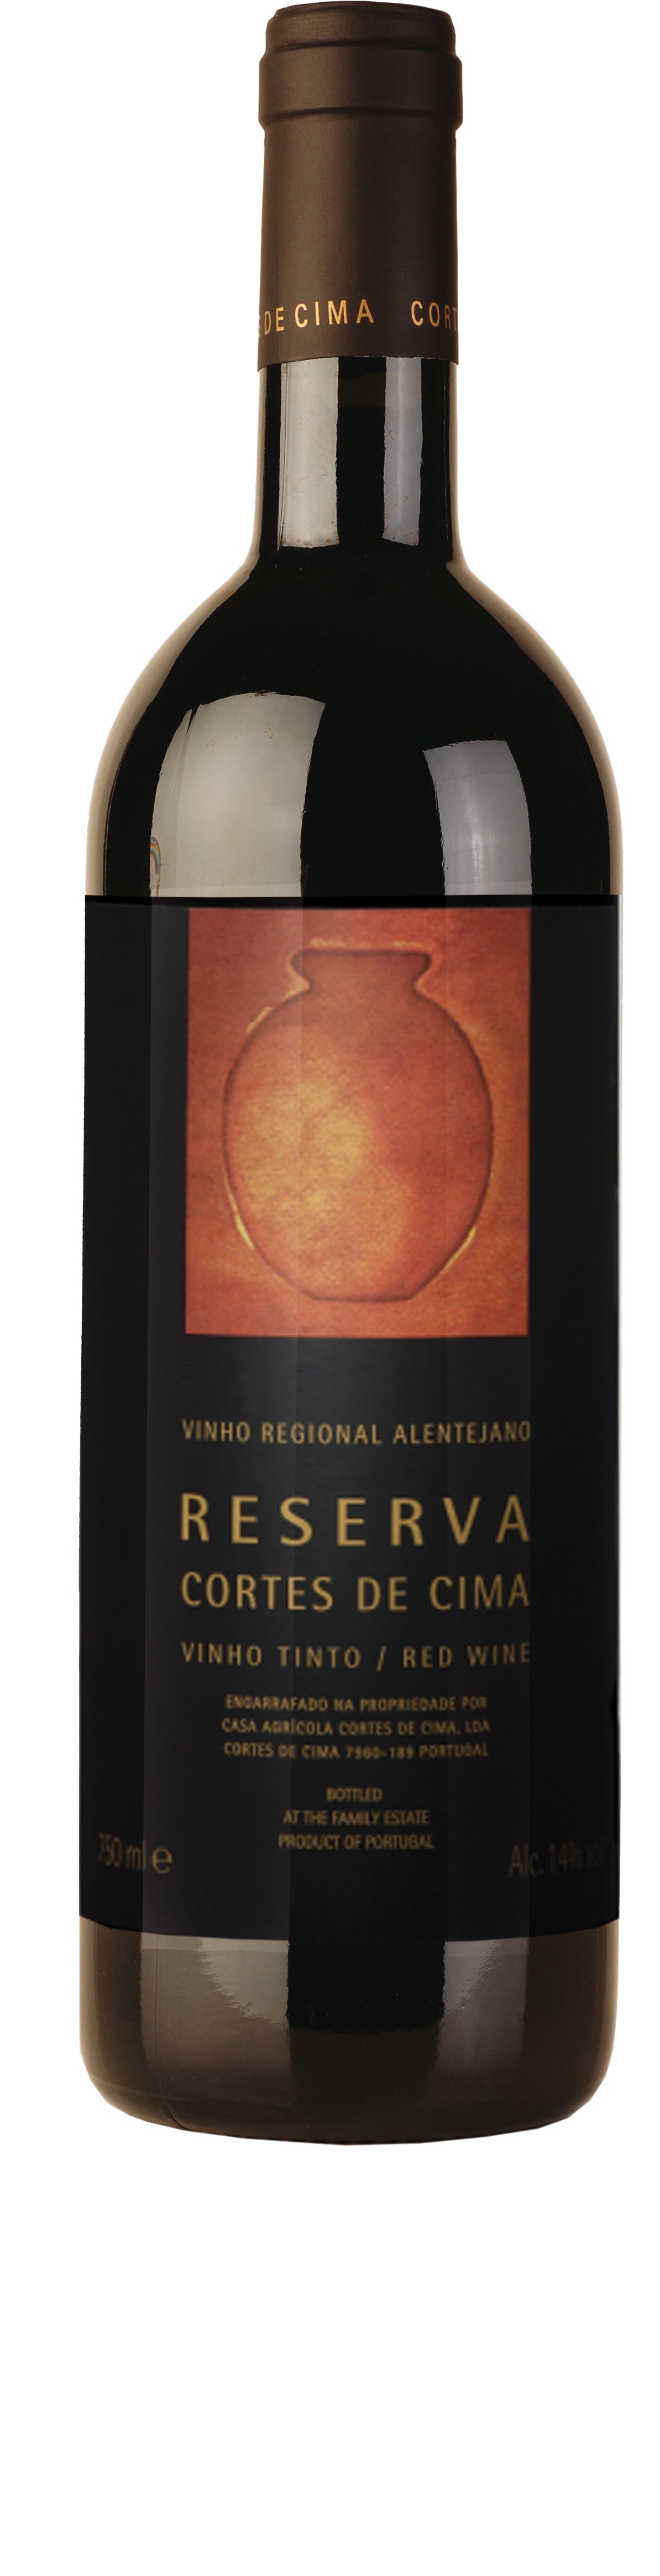 Wine Vins Cortes de Cima Reserva Tinto